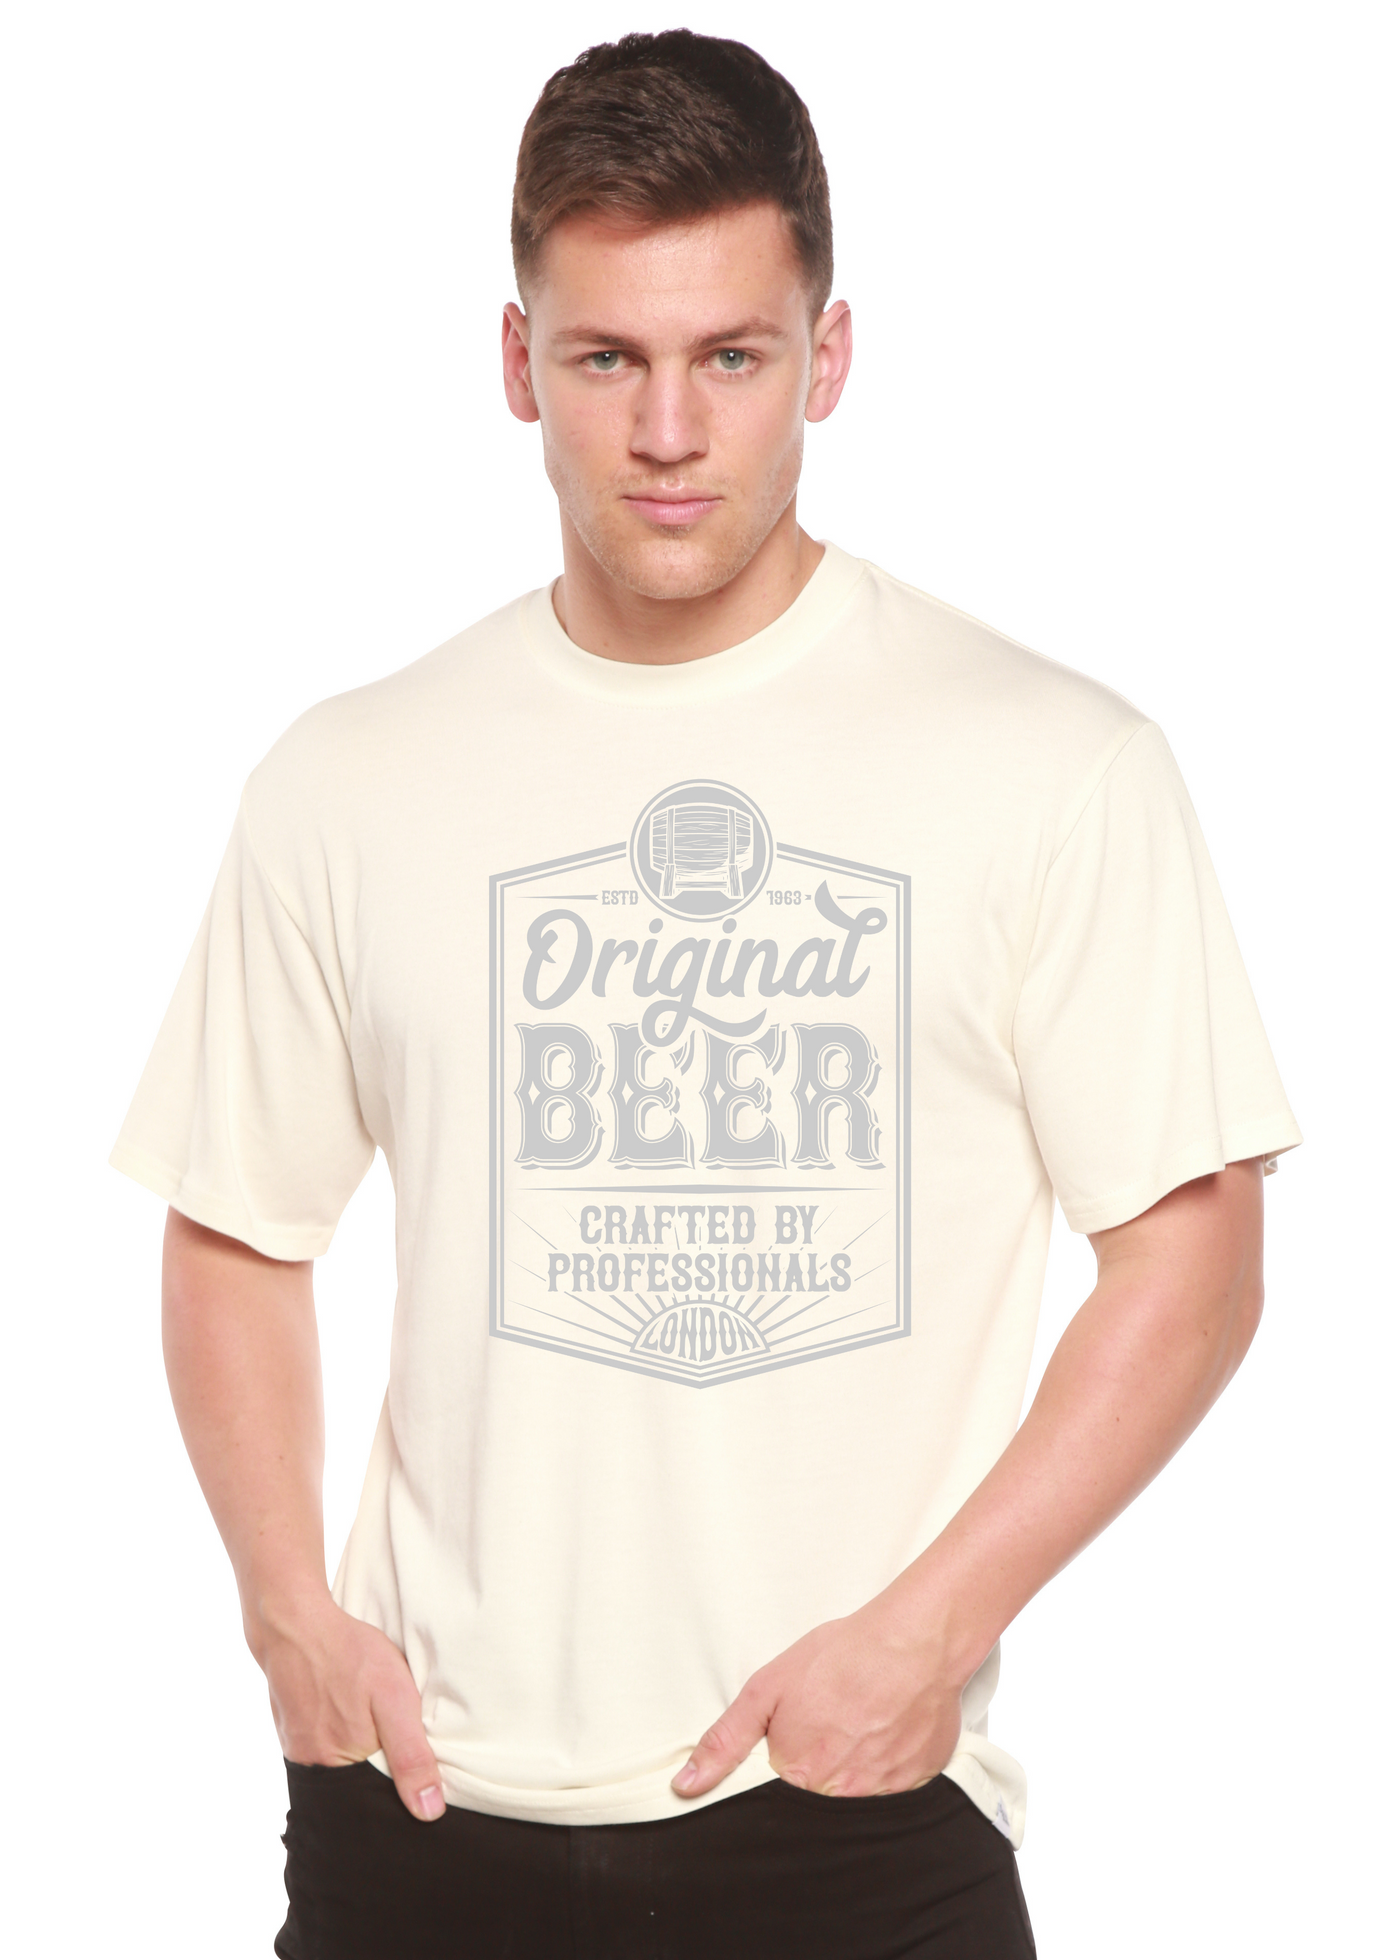 Original Beer men's bamboo tshirt white